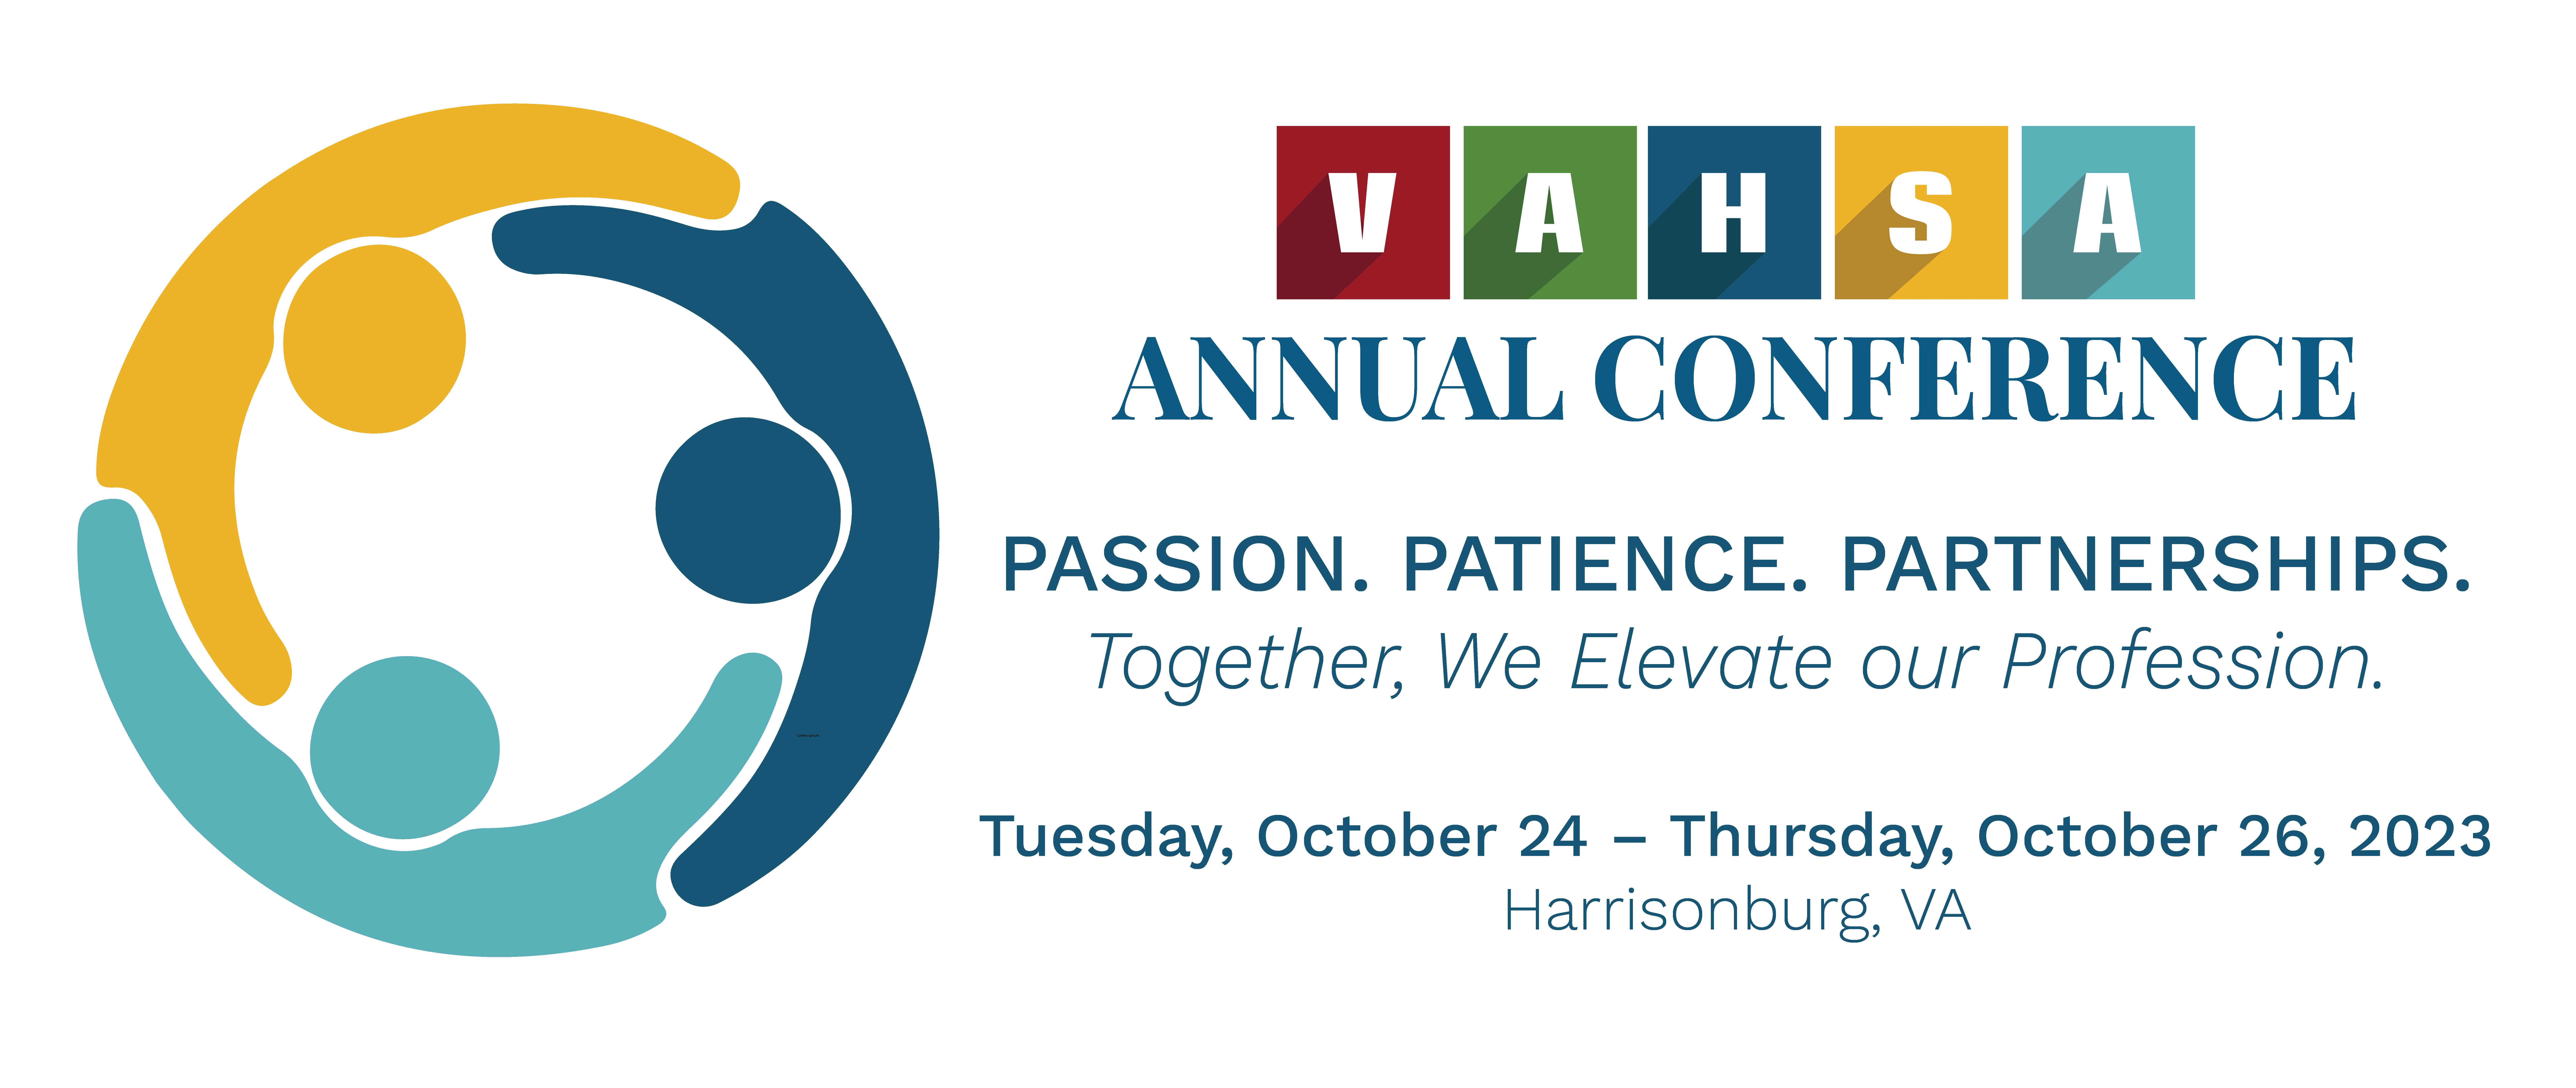 Annual Conference in Harrisonburg, VA